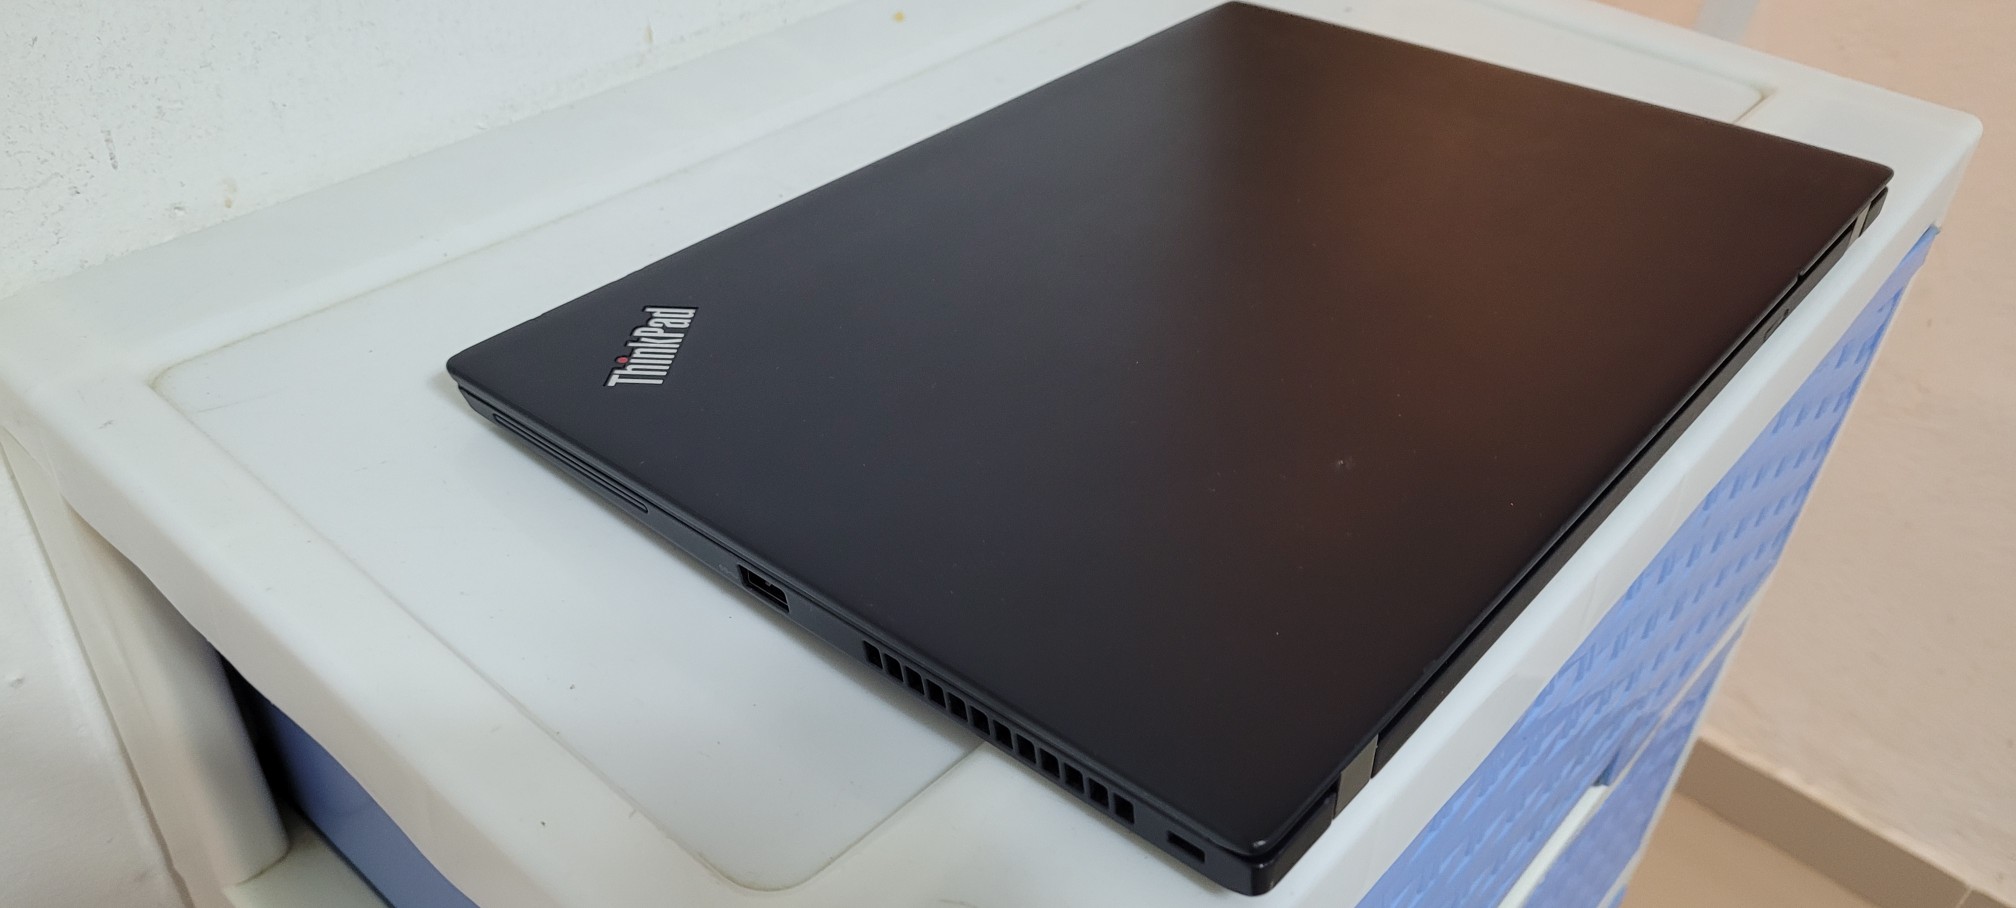 computadoras y laptops - Lenovo T460 14 Pulg Core i5 6ta Gen Ram 8gb ddr4 Disco 256gb SSD hdmi 2